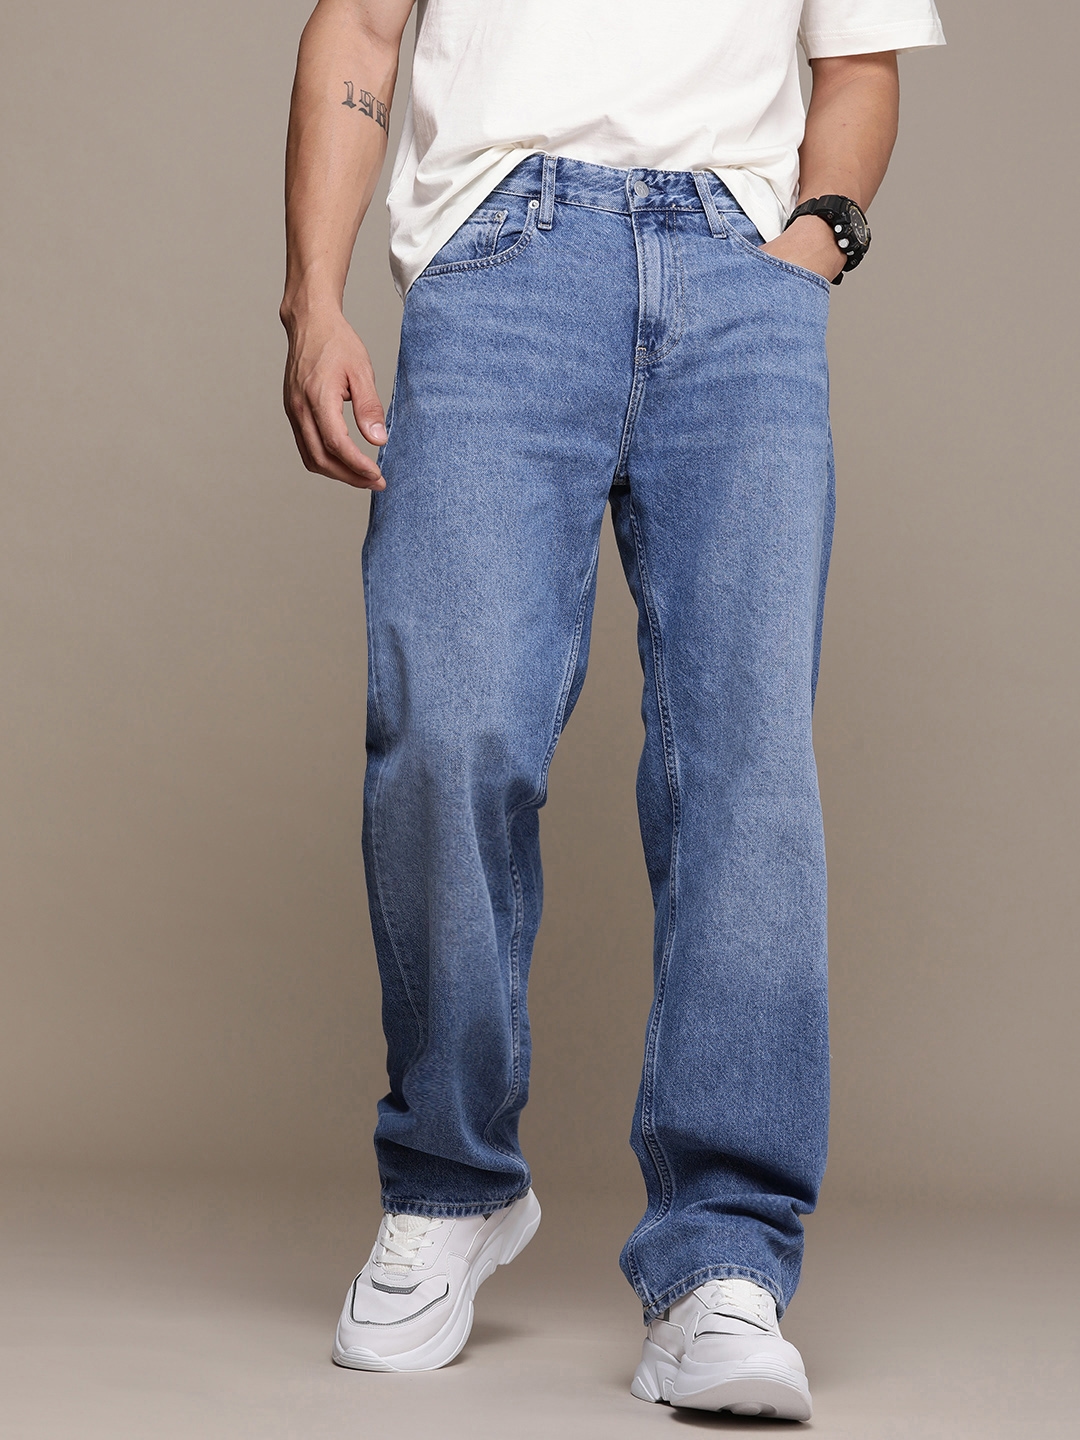 Details 118+ straight fit jeans mens